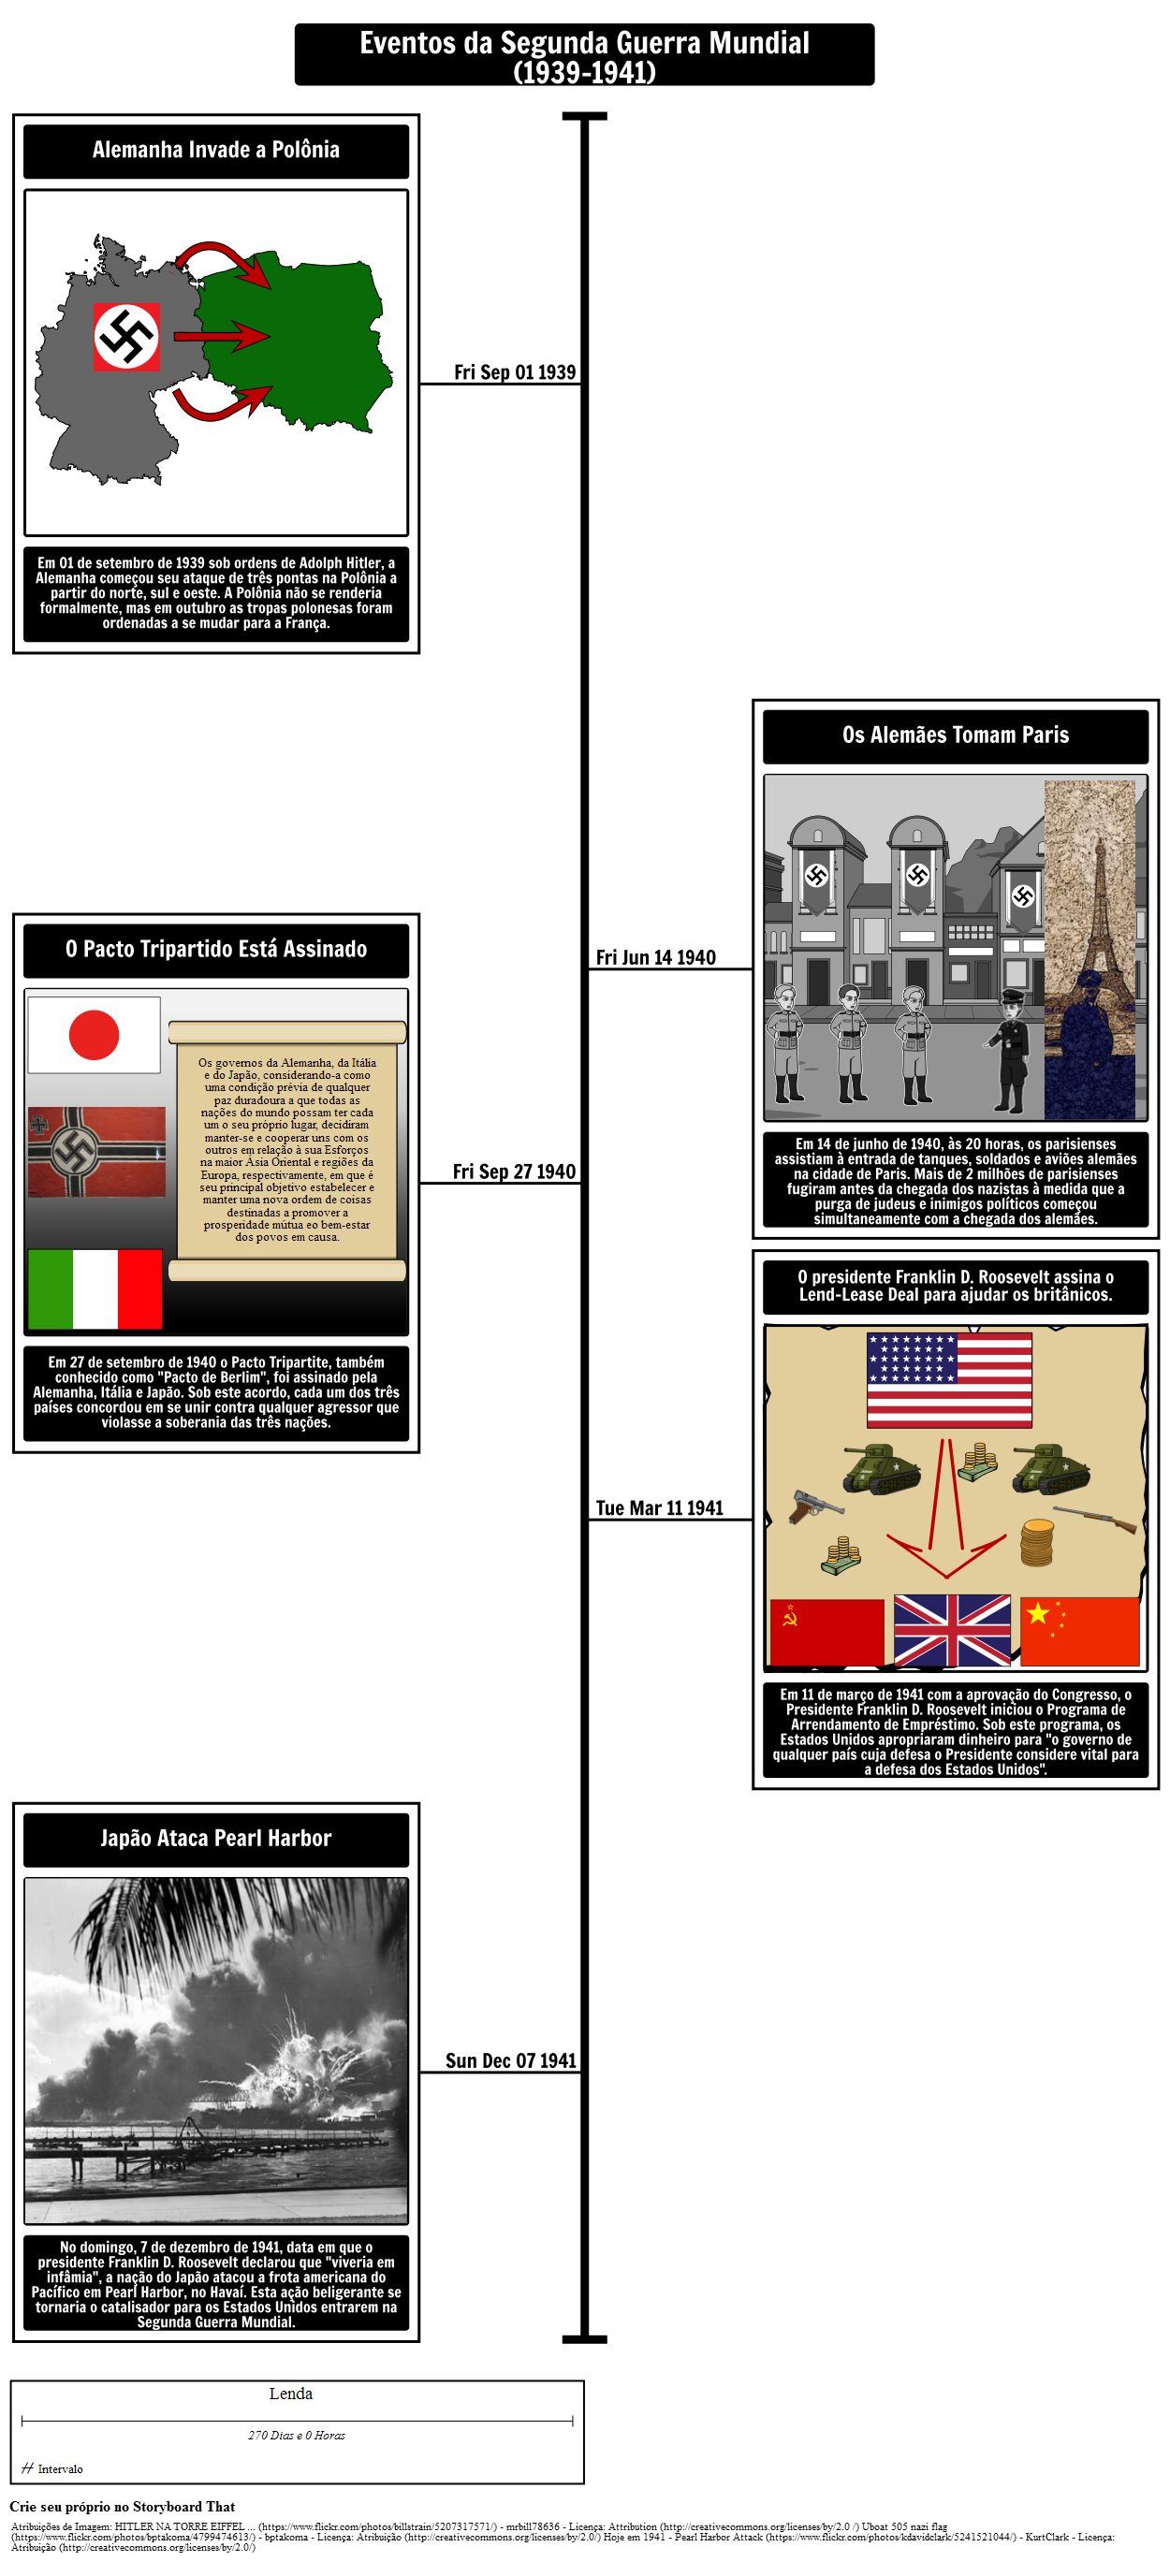 Segunda Guerra Mundial Timeline 1939-1941